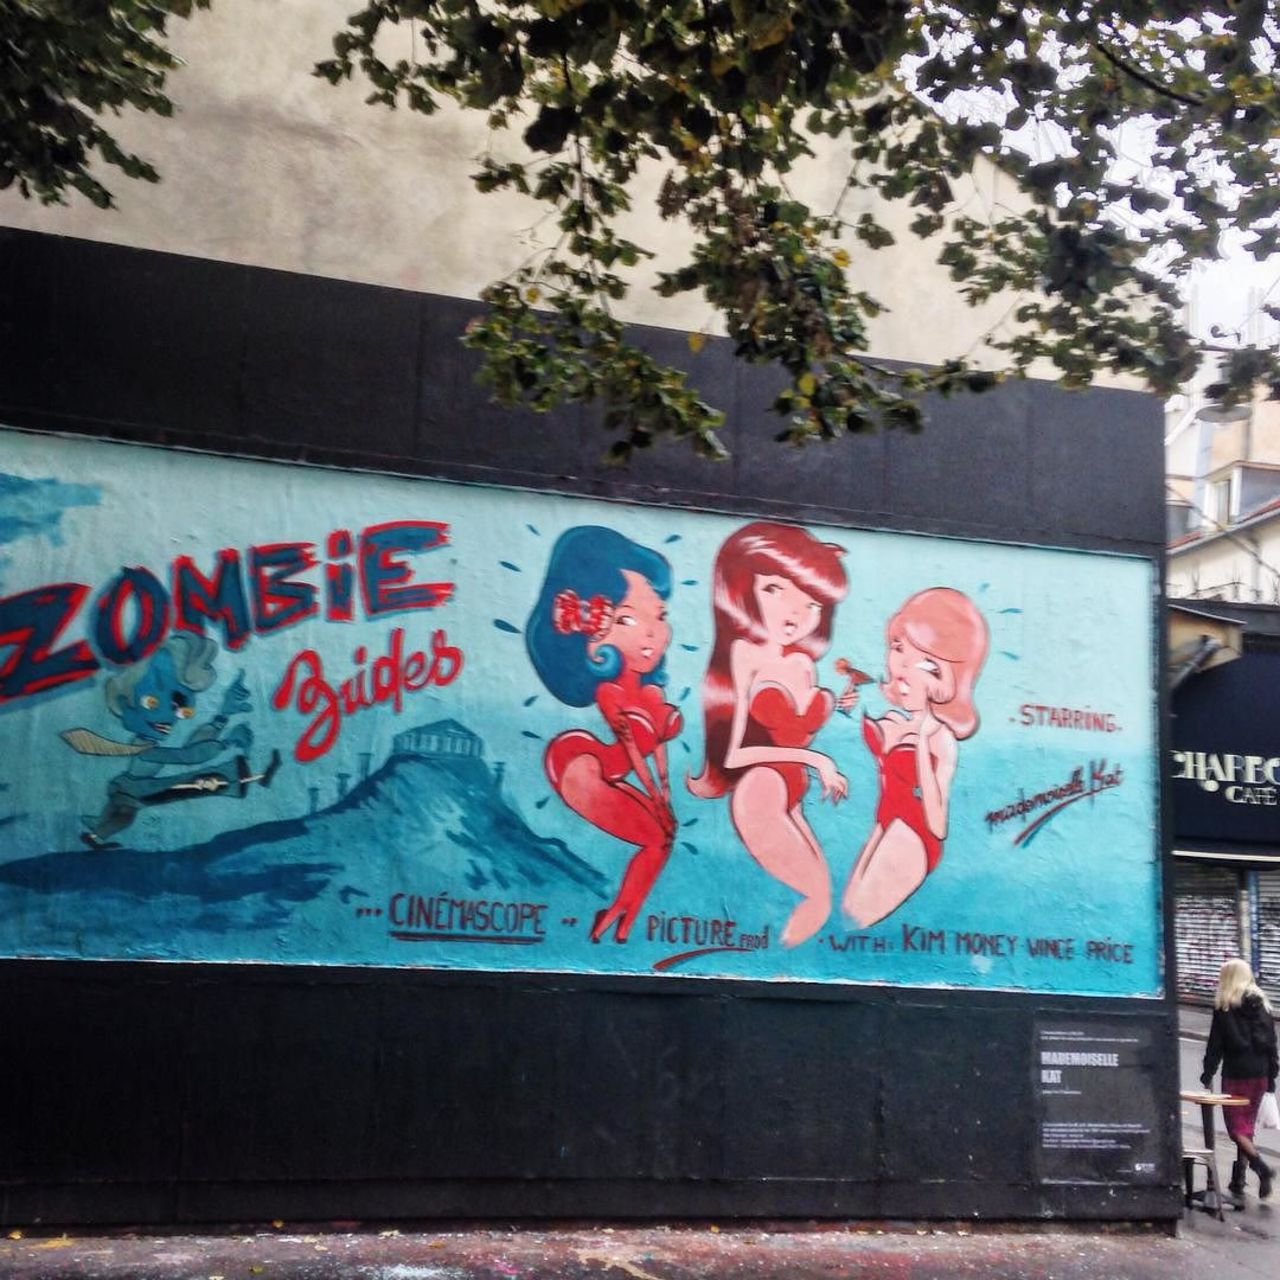 #Paris #graffiti photo by @joecoolpix http://ift.tt/1jI0glM #StreetArt https://t.co/pNCdhLIHAu